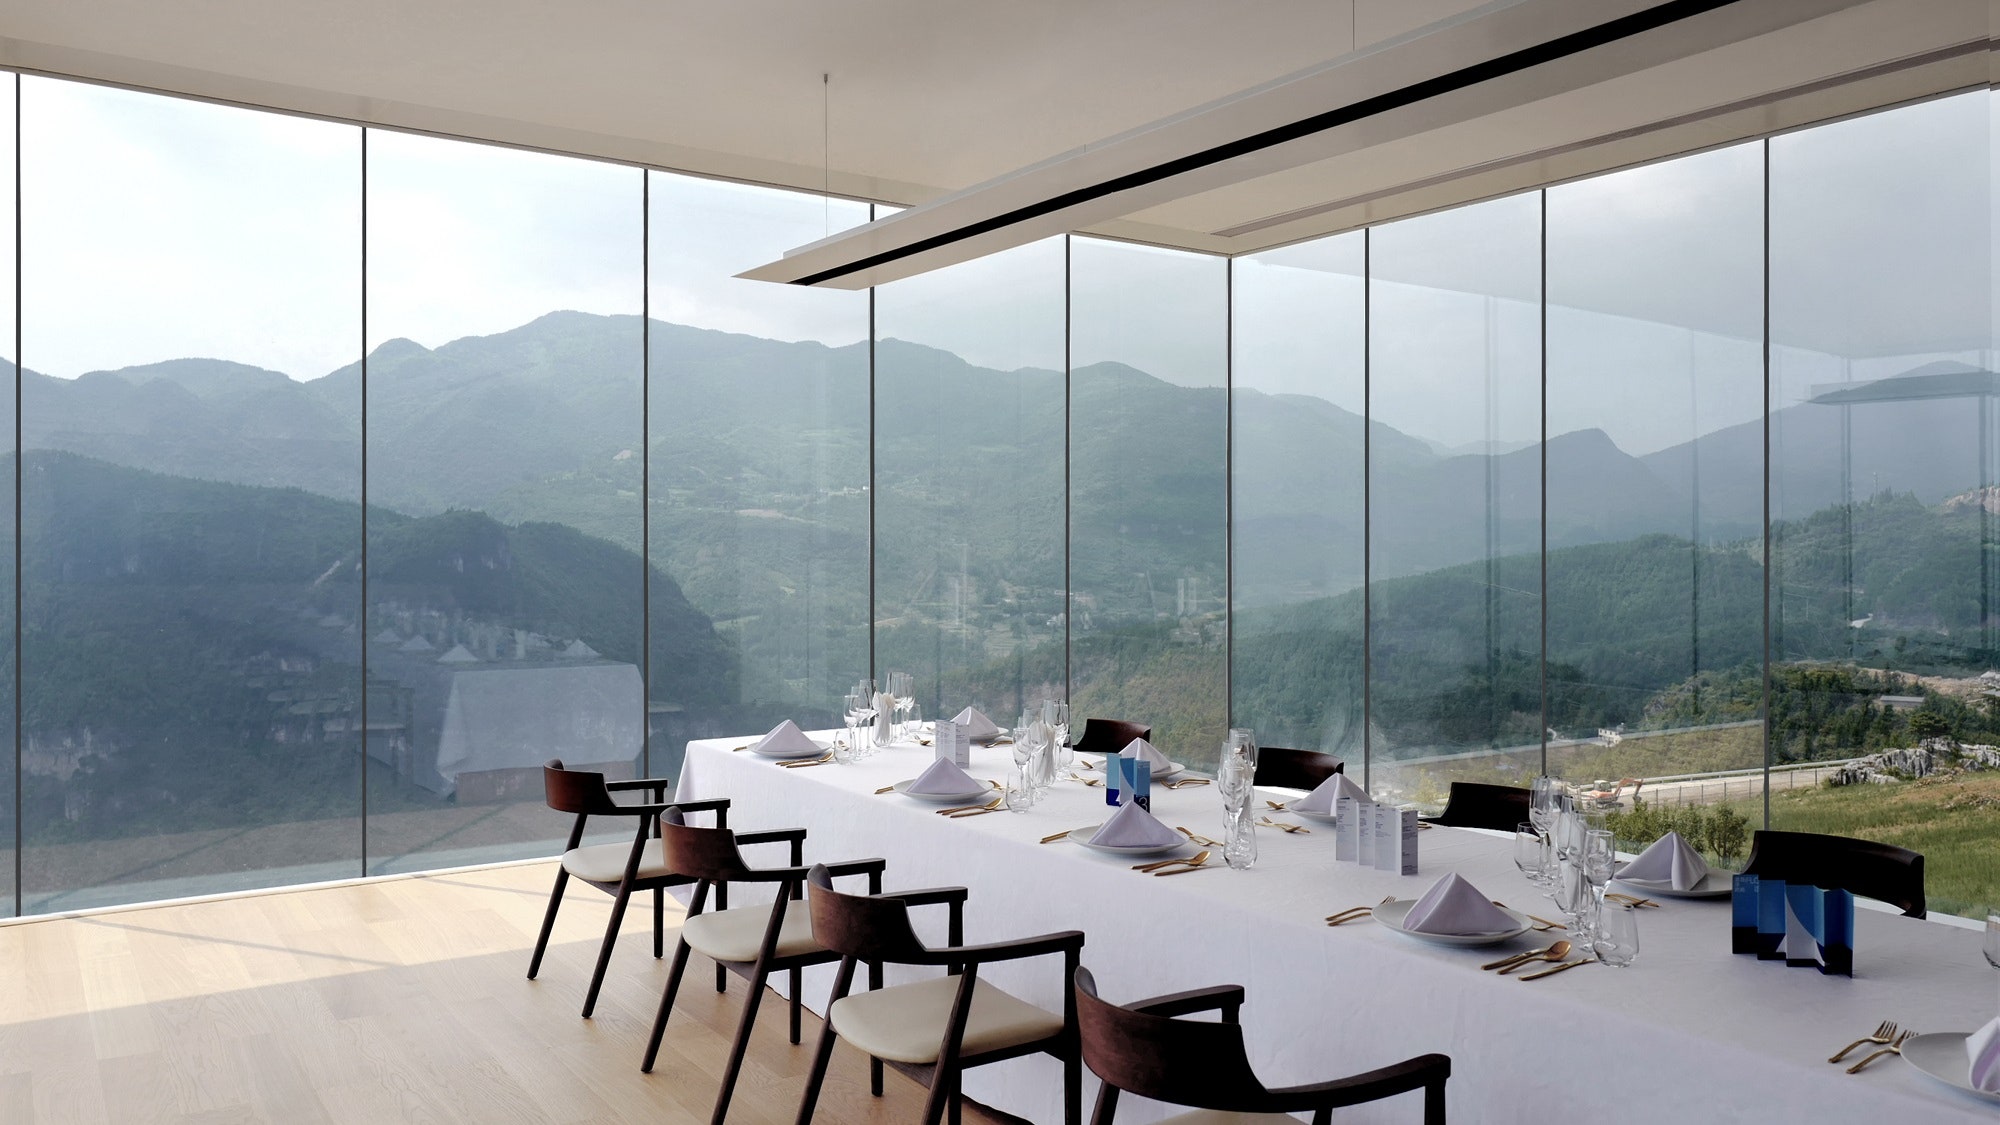 “Парящий ресторан” в горах Китая